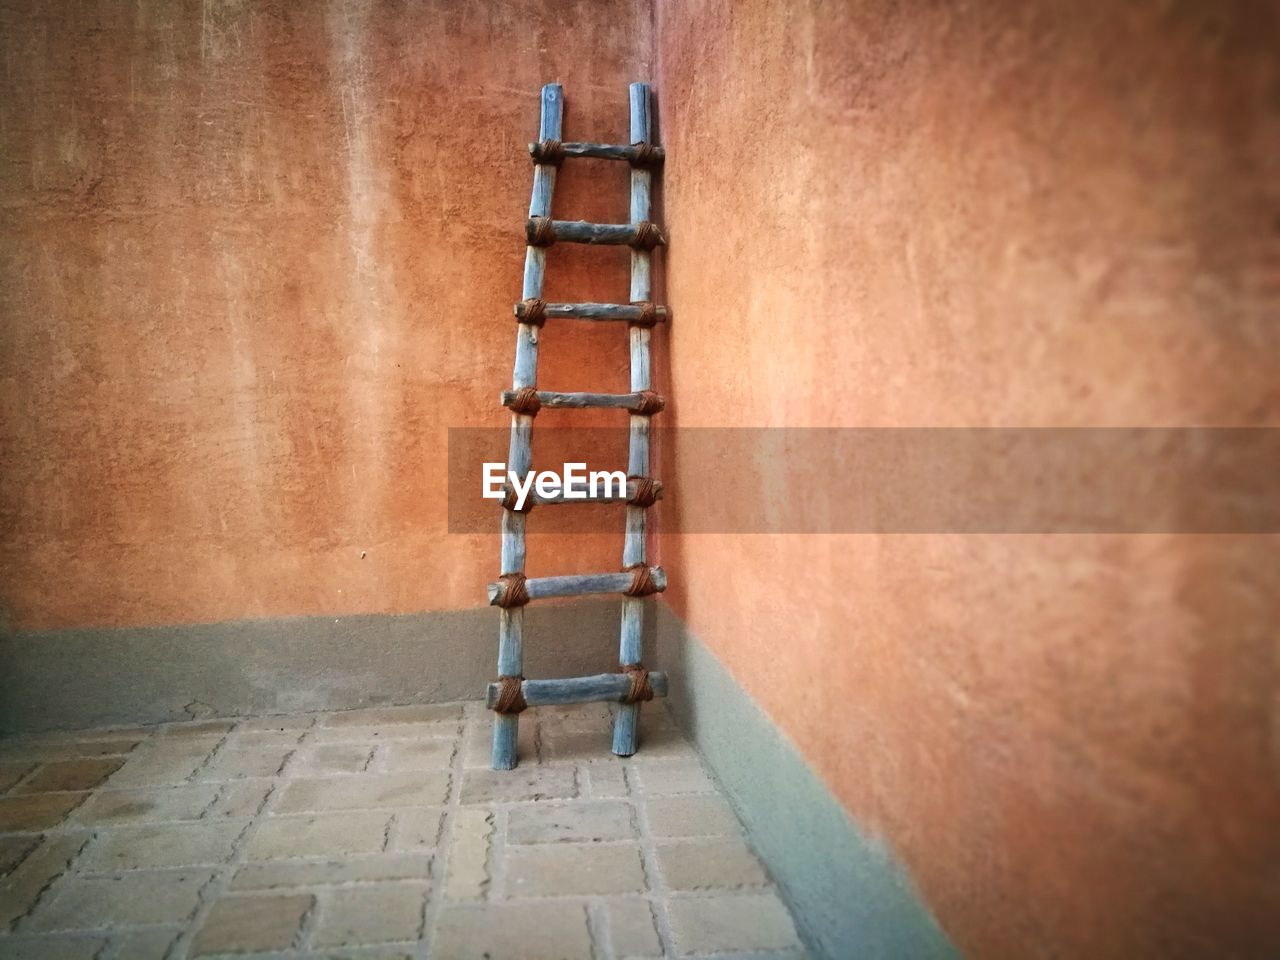 Ladder - object in a corner